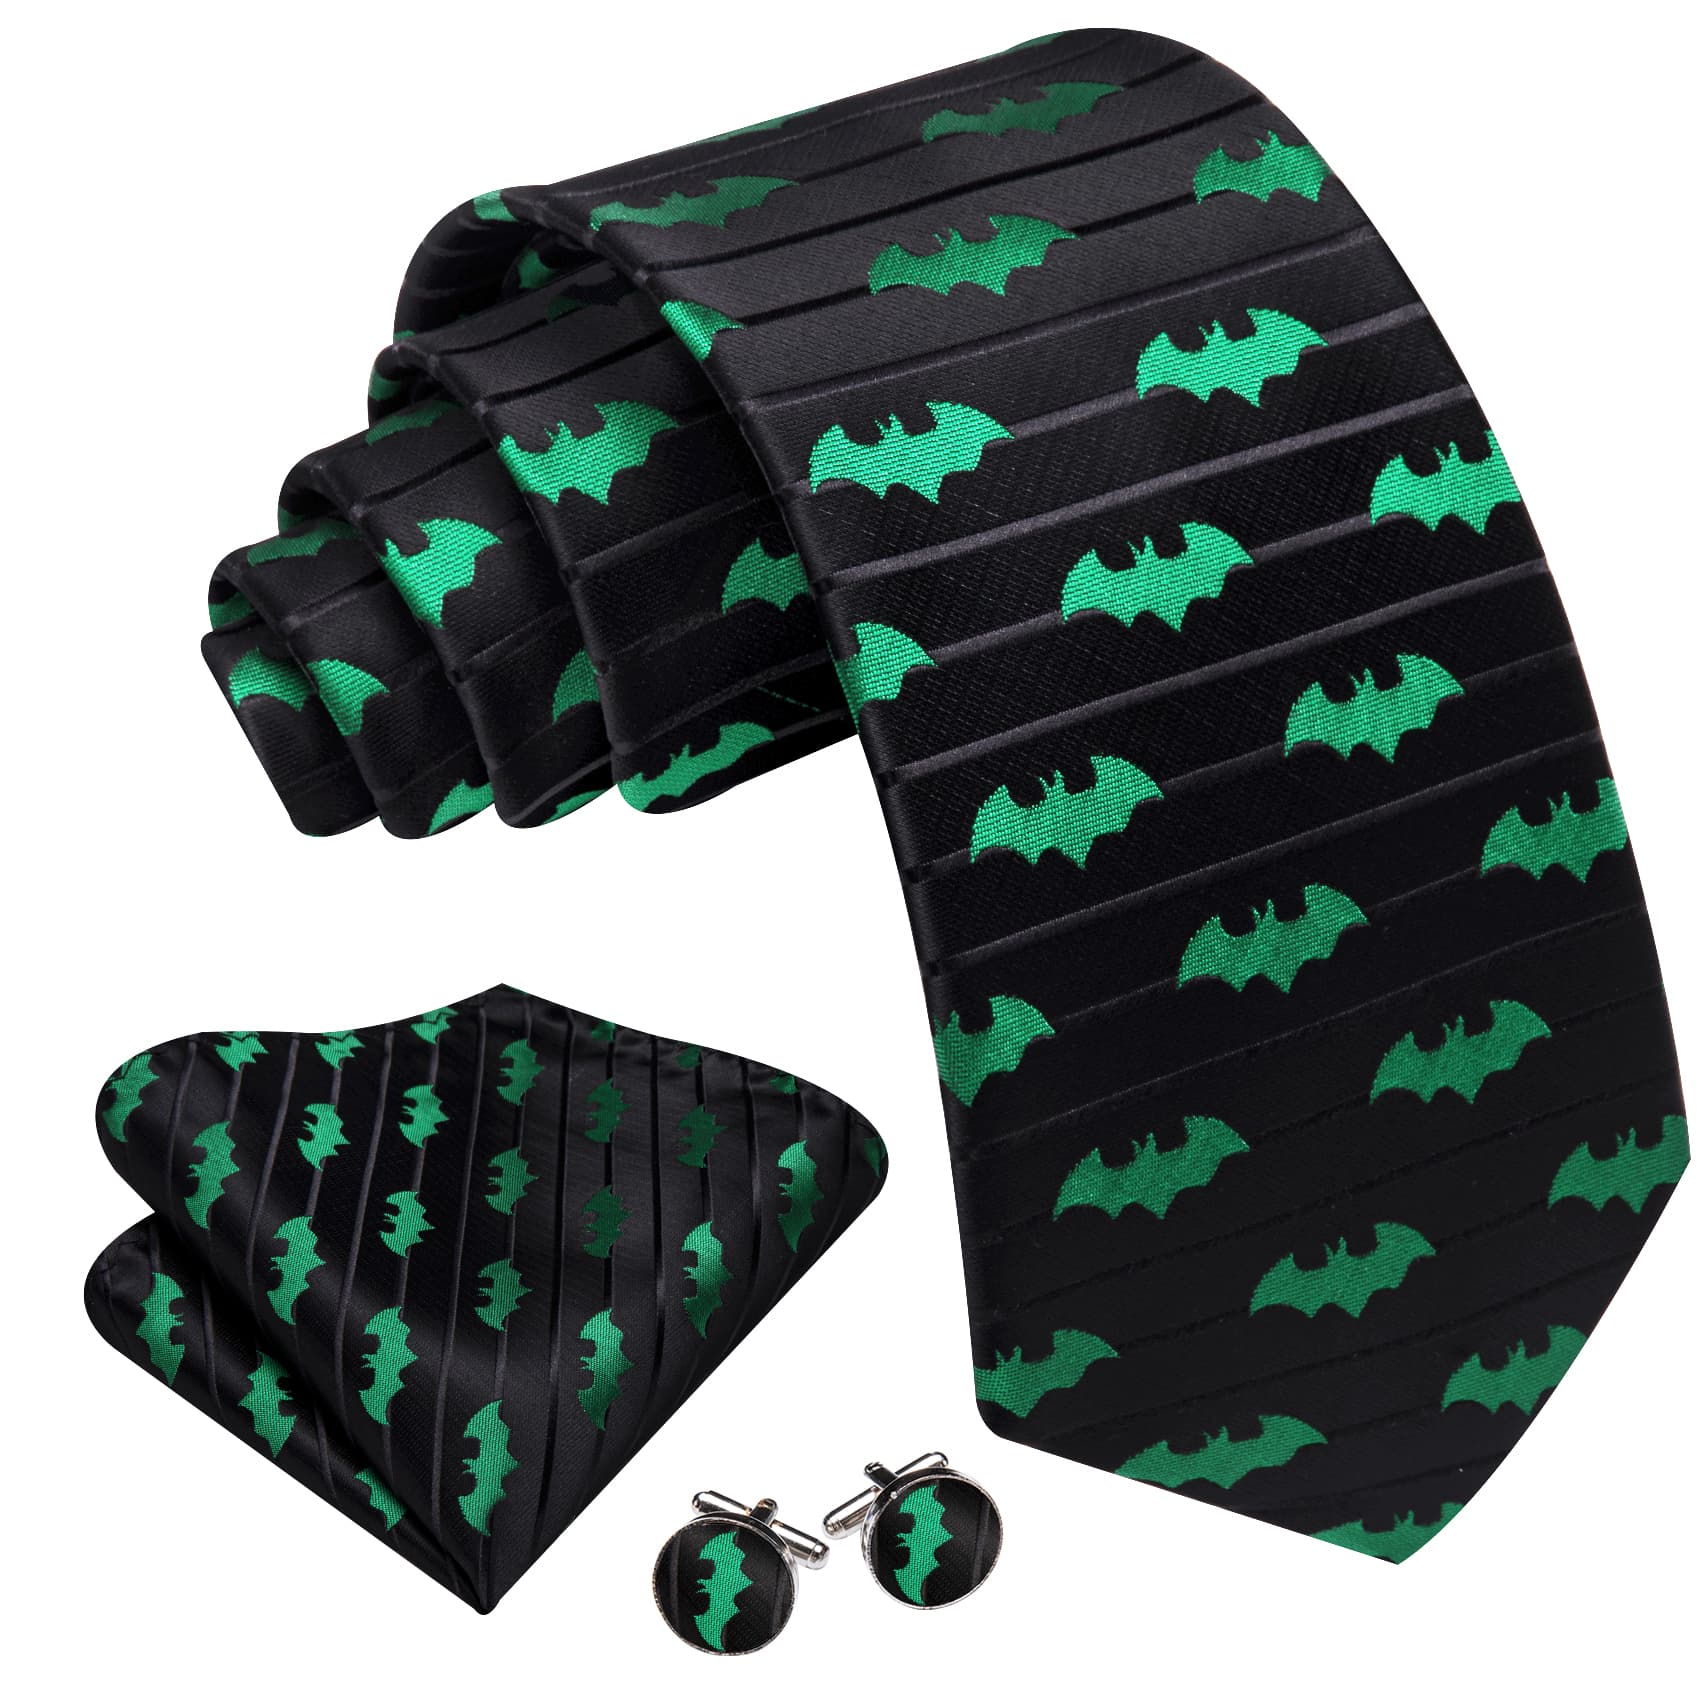  Tie Jacquard Green Bat Black Novelty Necktie Hanky Cufflinks Set